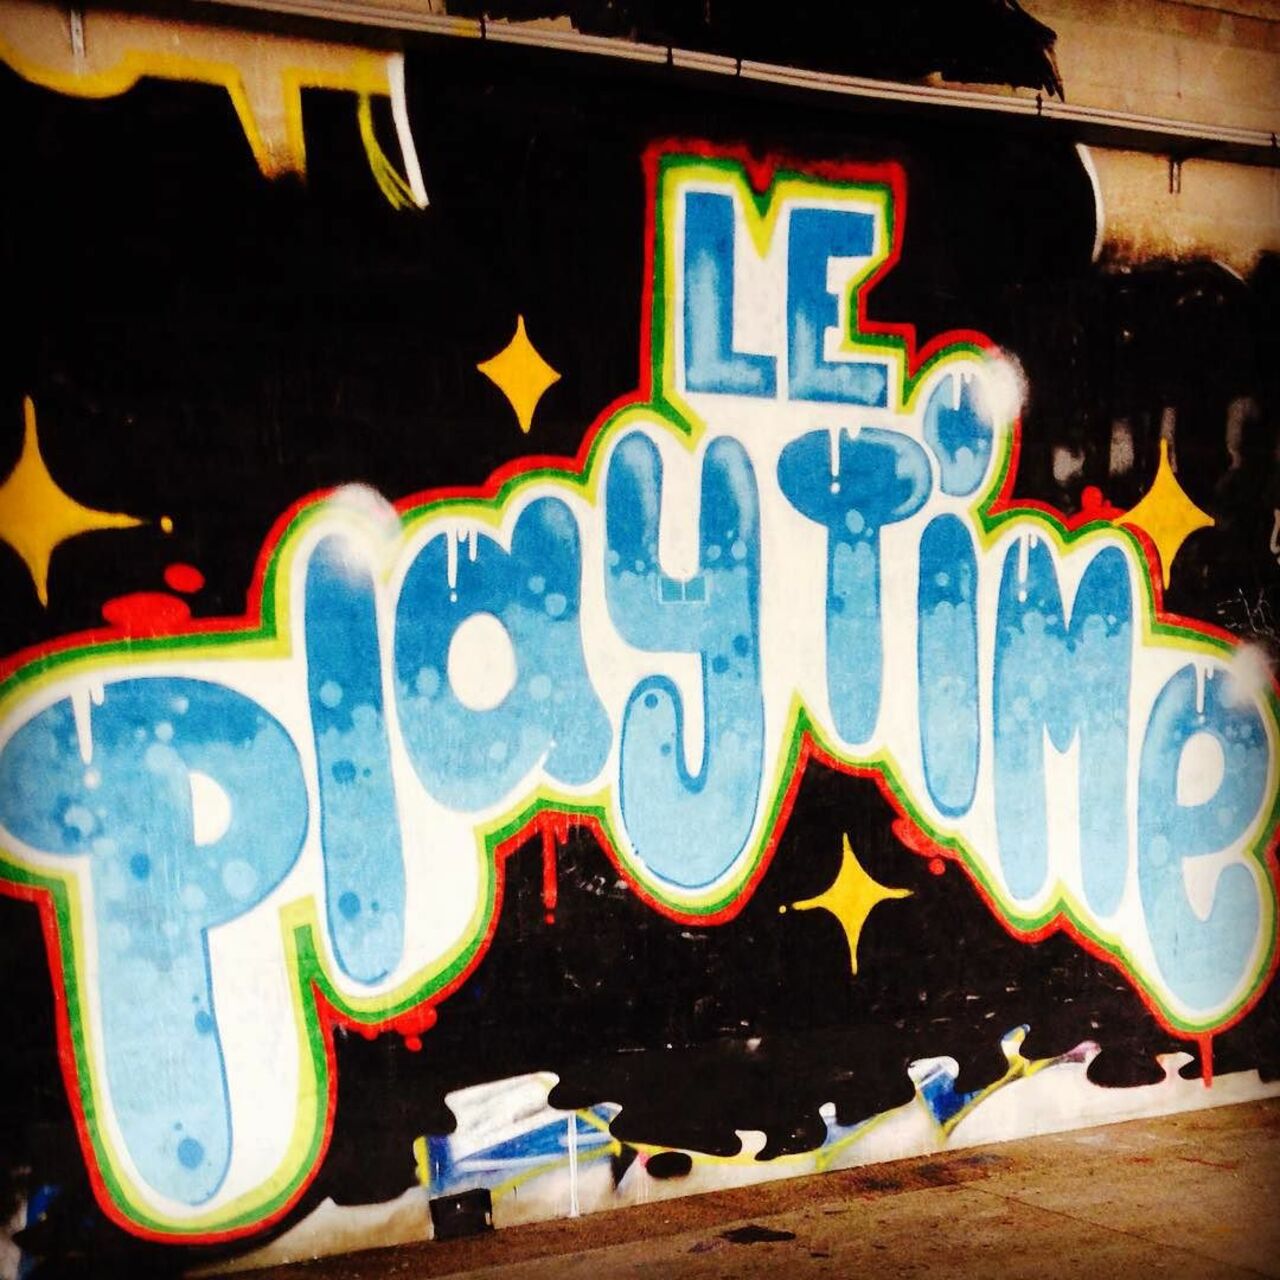 #Paris #graffiti photo by @perla_pinpin http://ift.tt/1ORcVzE #StreetArt https://t.co/Qk8qtFZ1rJ